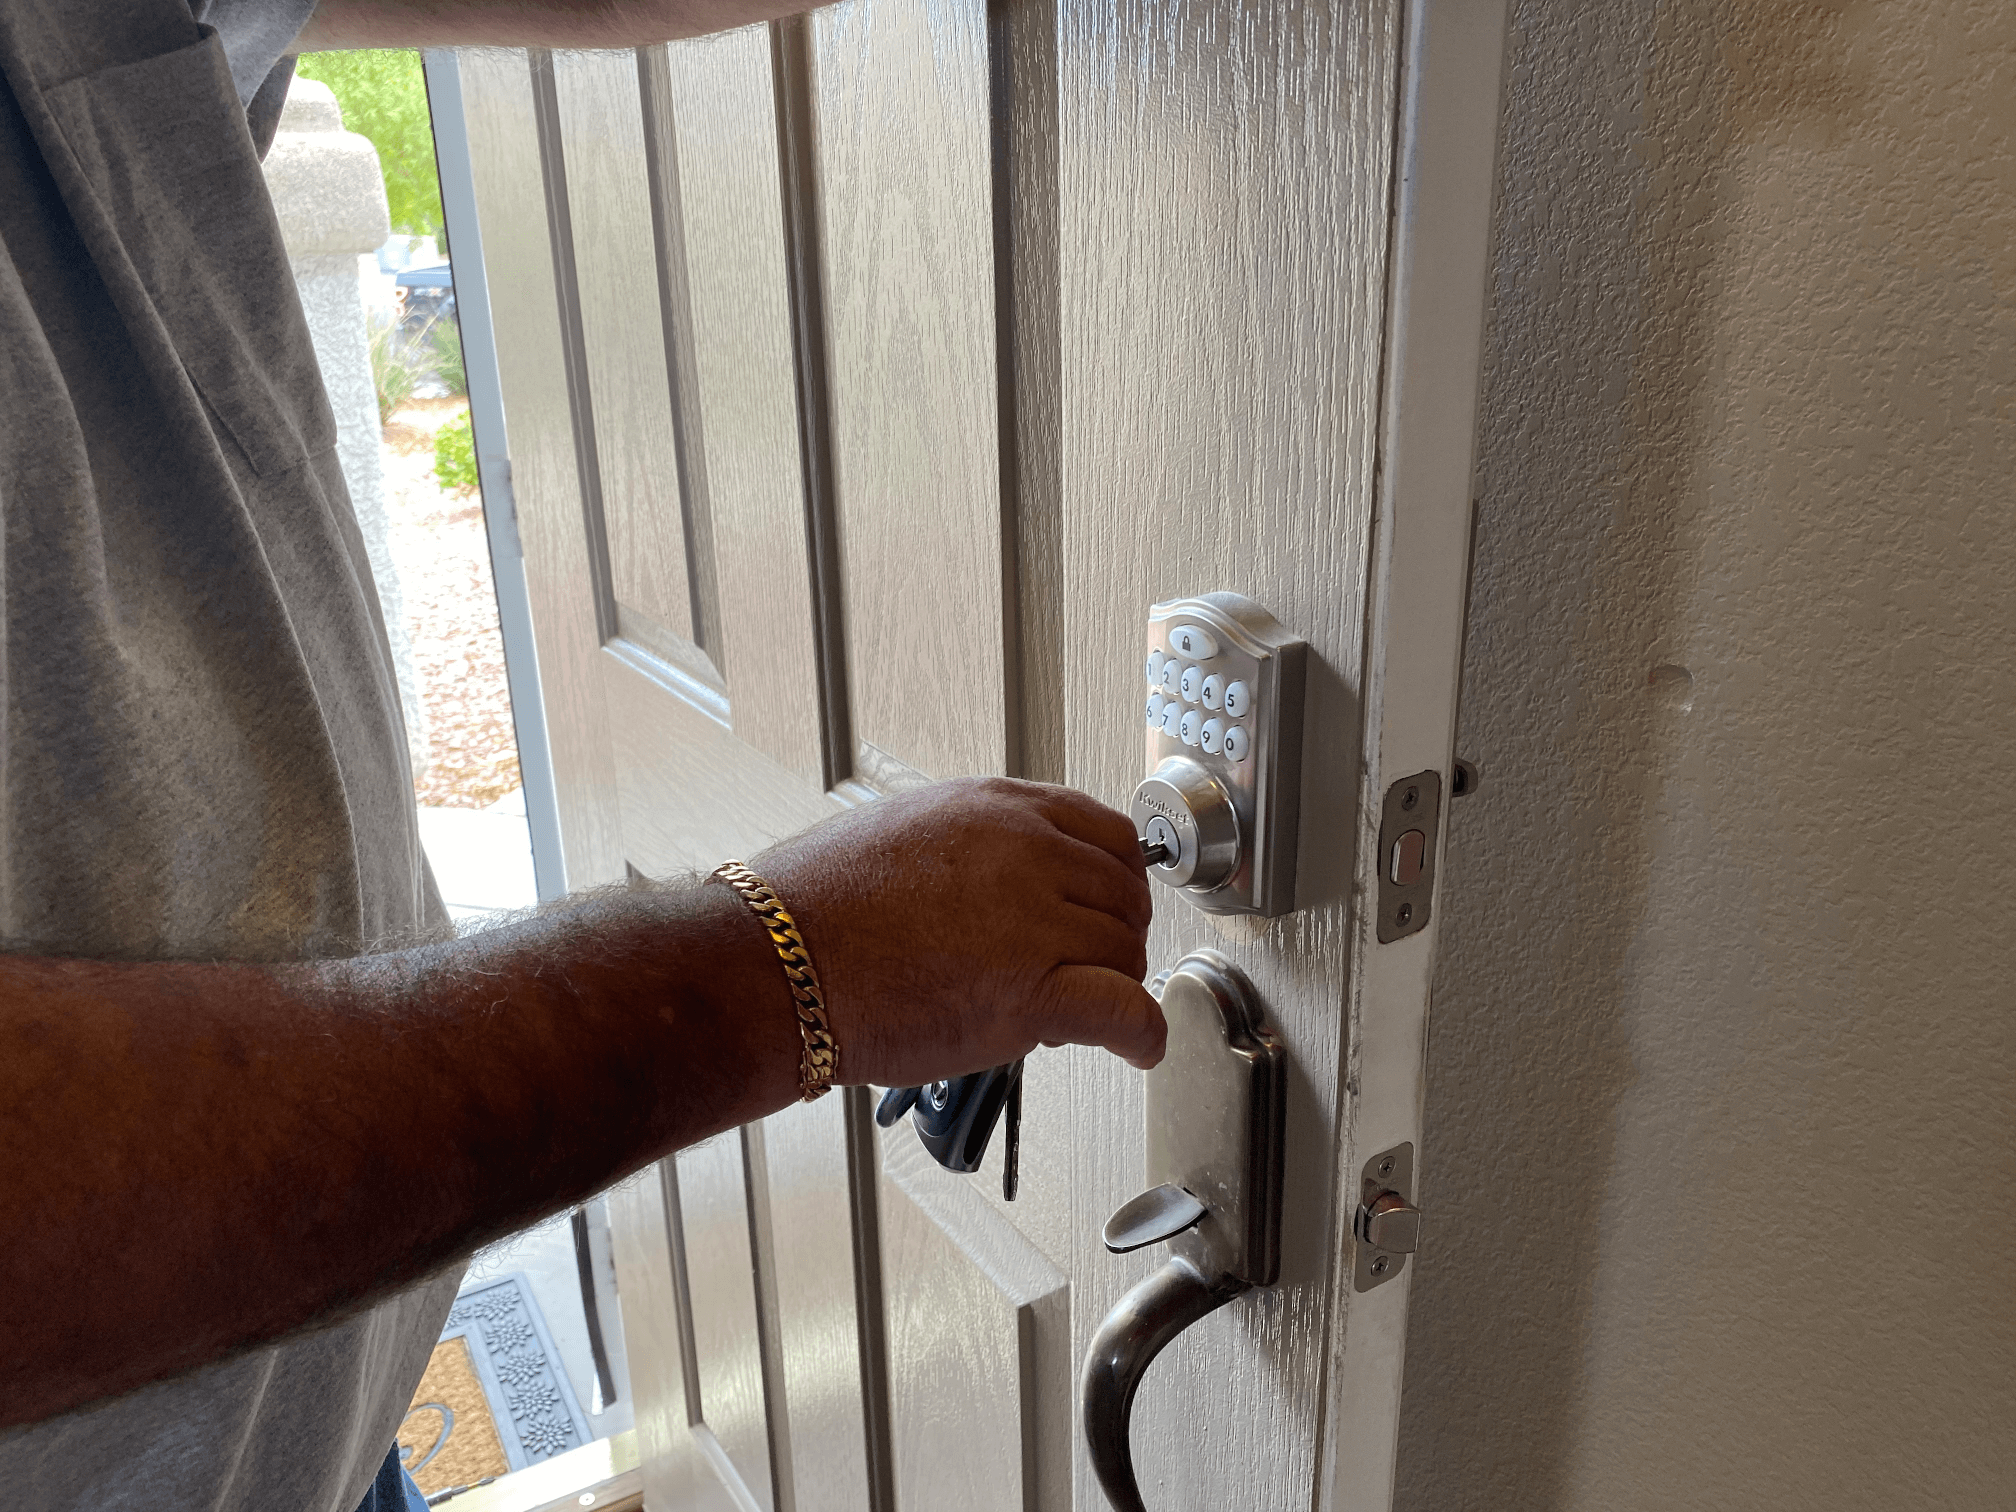 Old man working on a door lock